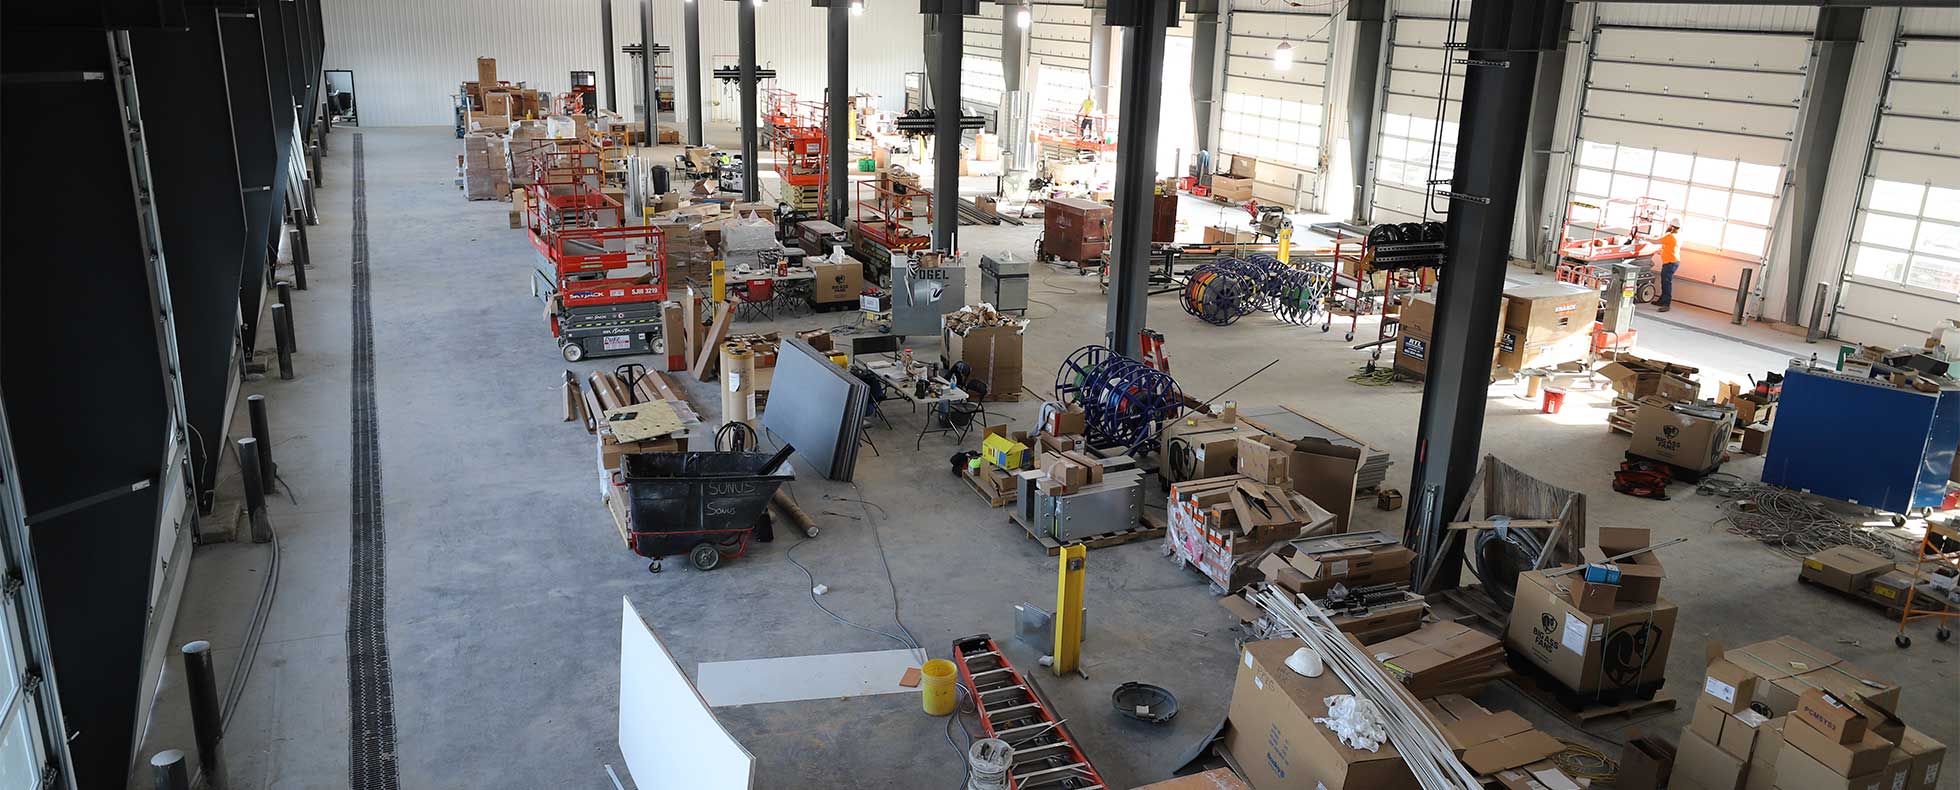 Construction Progress at New RDO Equipment Co. Store in Dayton, MN